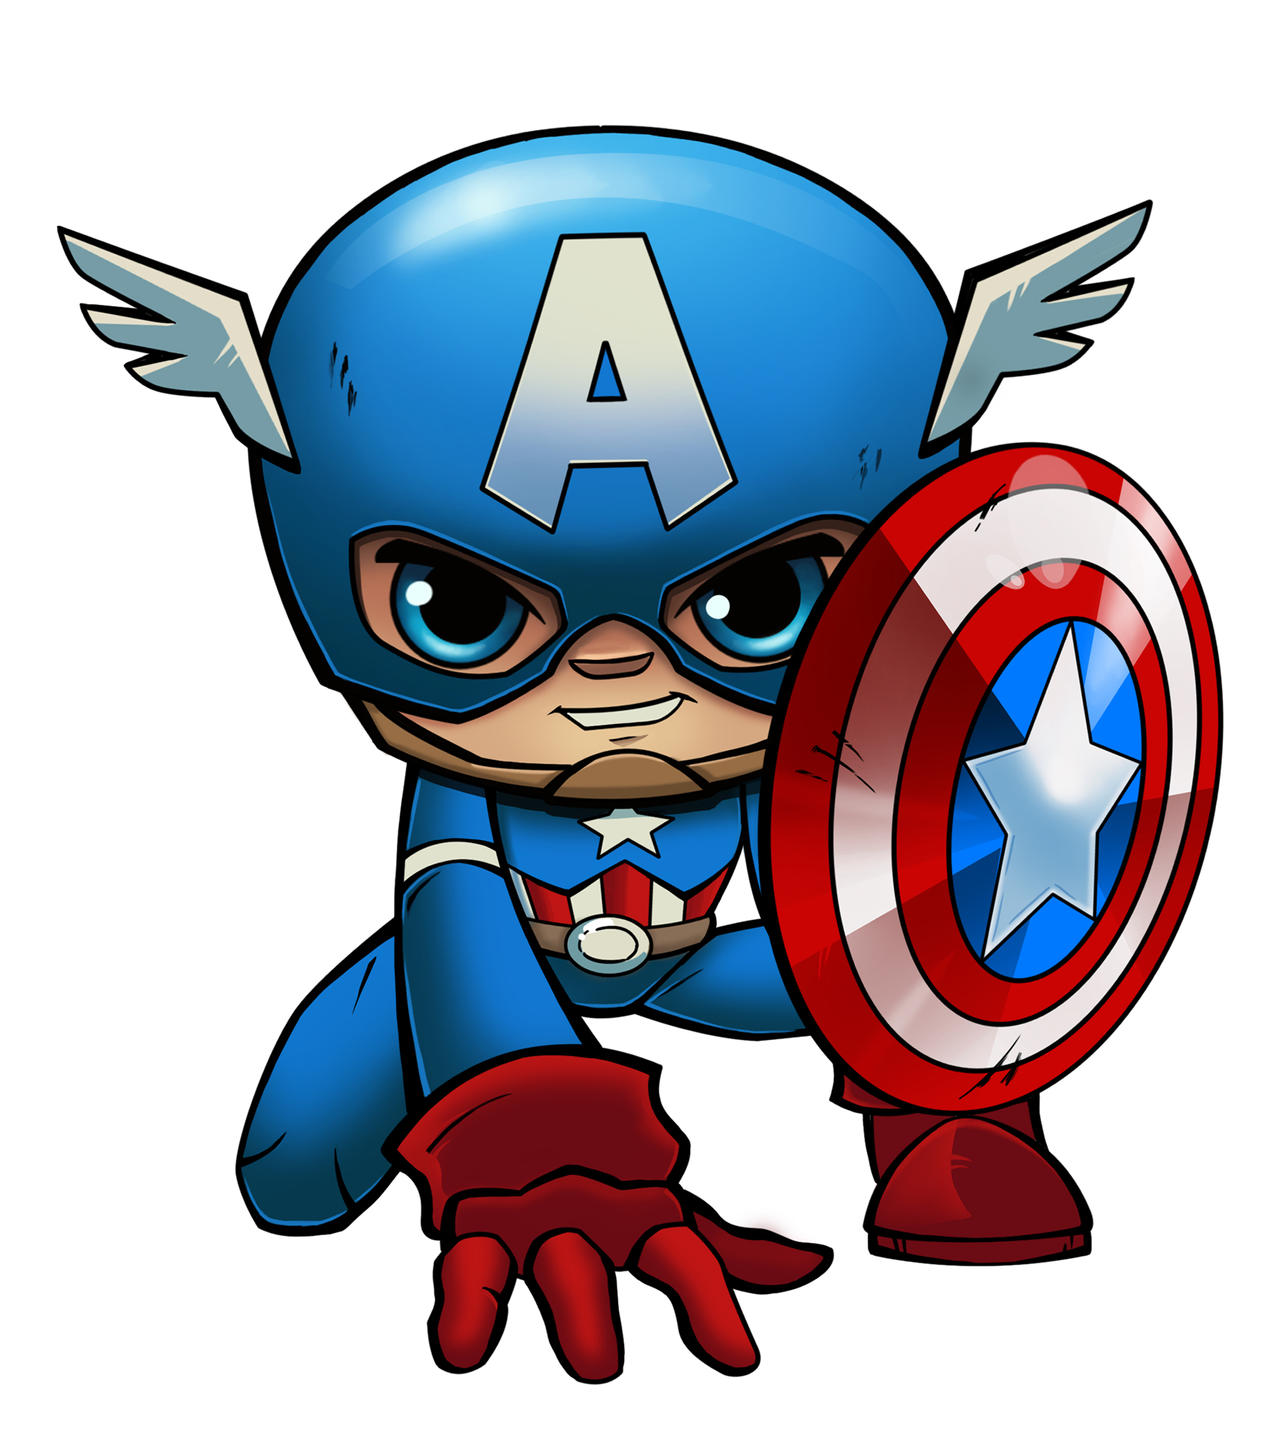 Captain America by GentleSn0w on DeviantArt